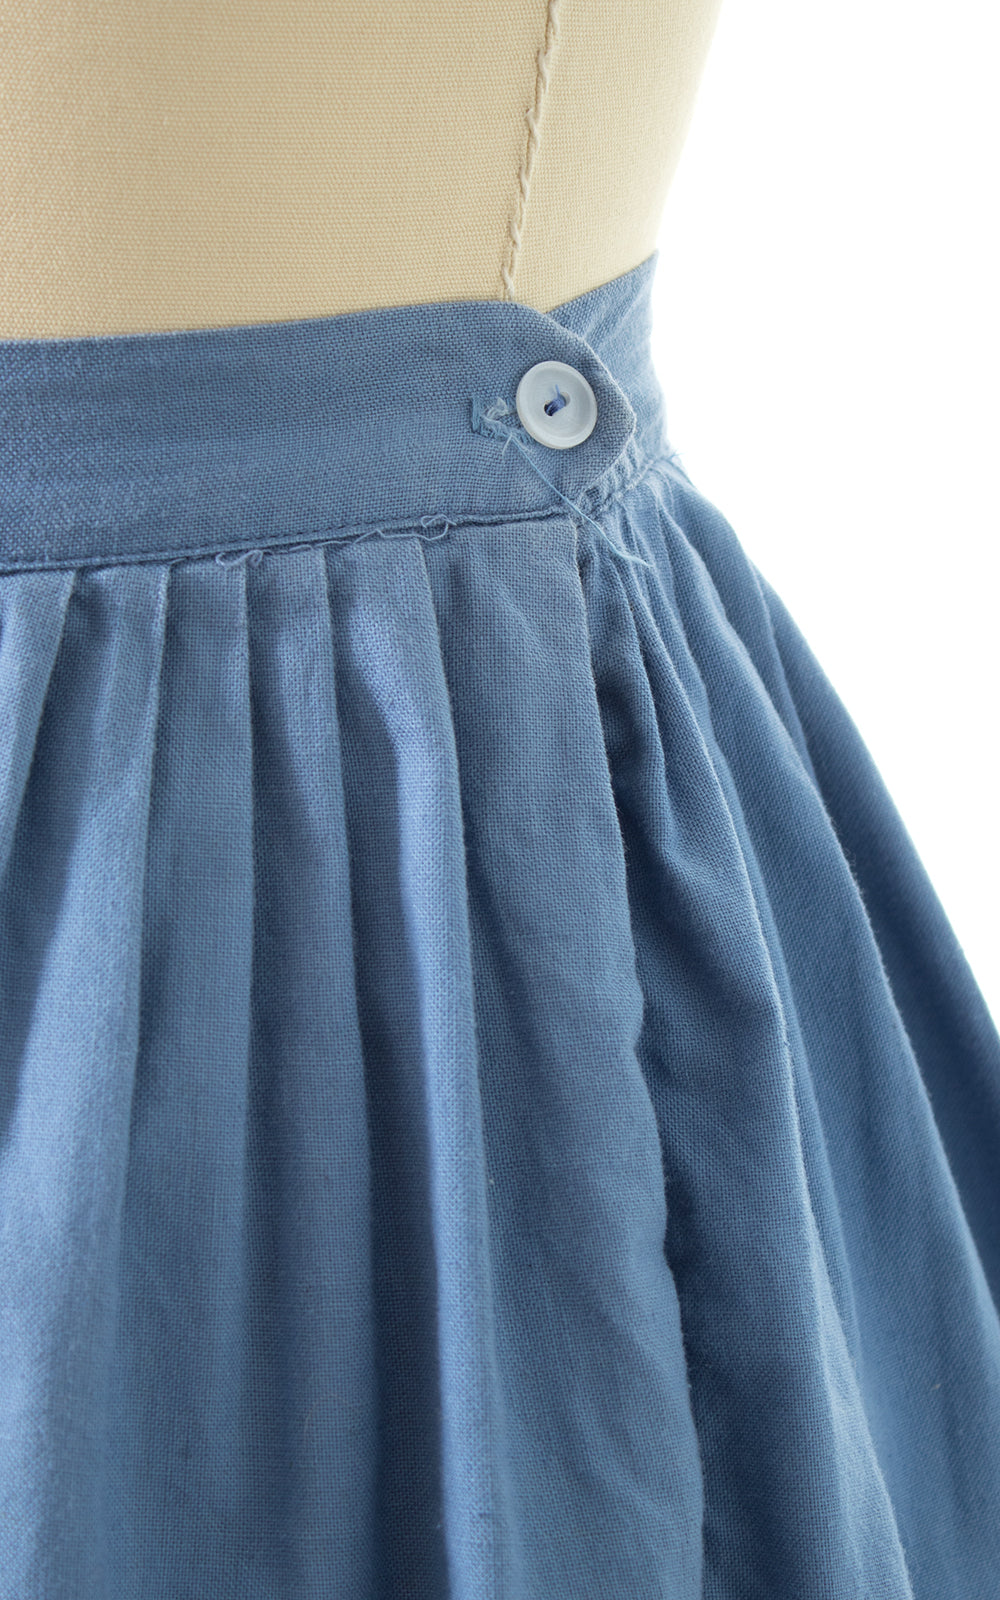 1950s Periwinkle Blue Cotton Skirt